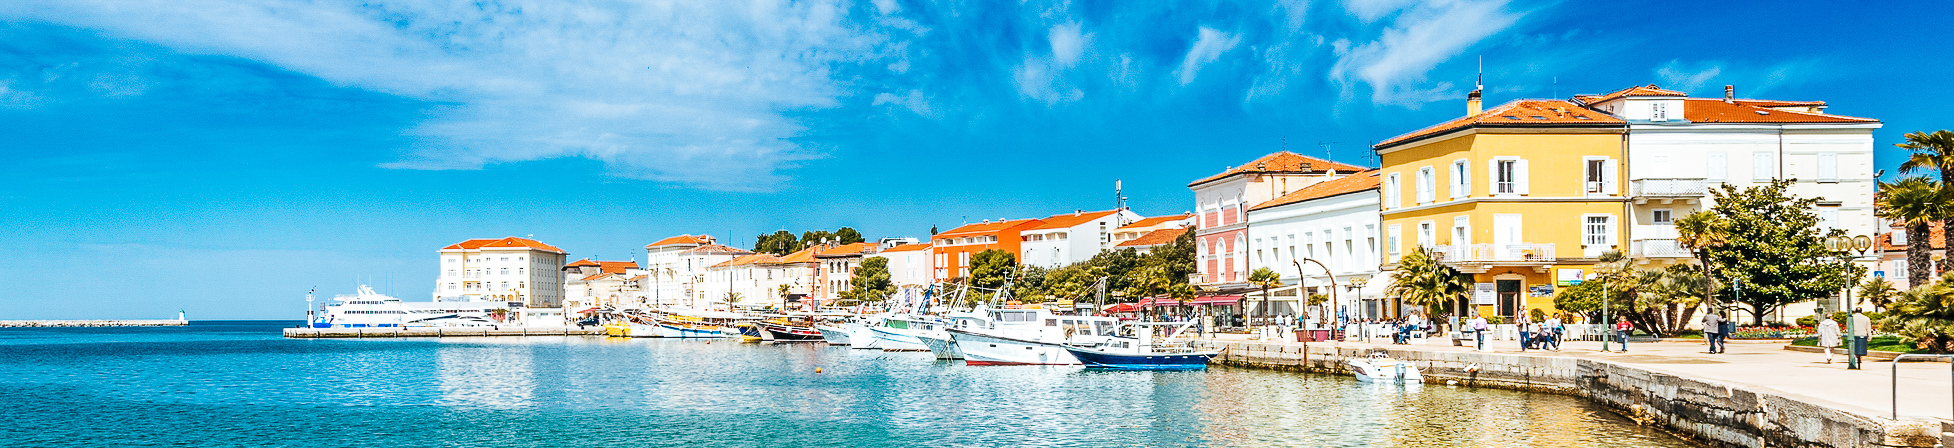 Hafenpanorama von Porec in Istrien